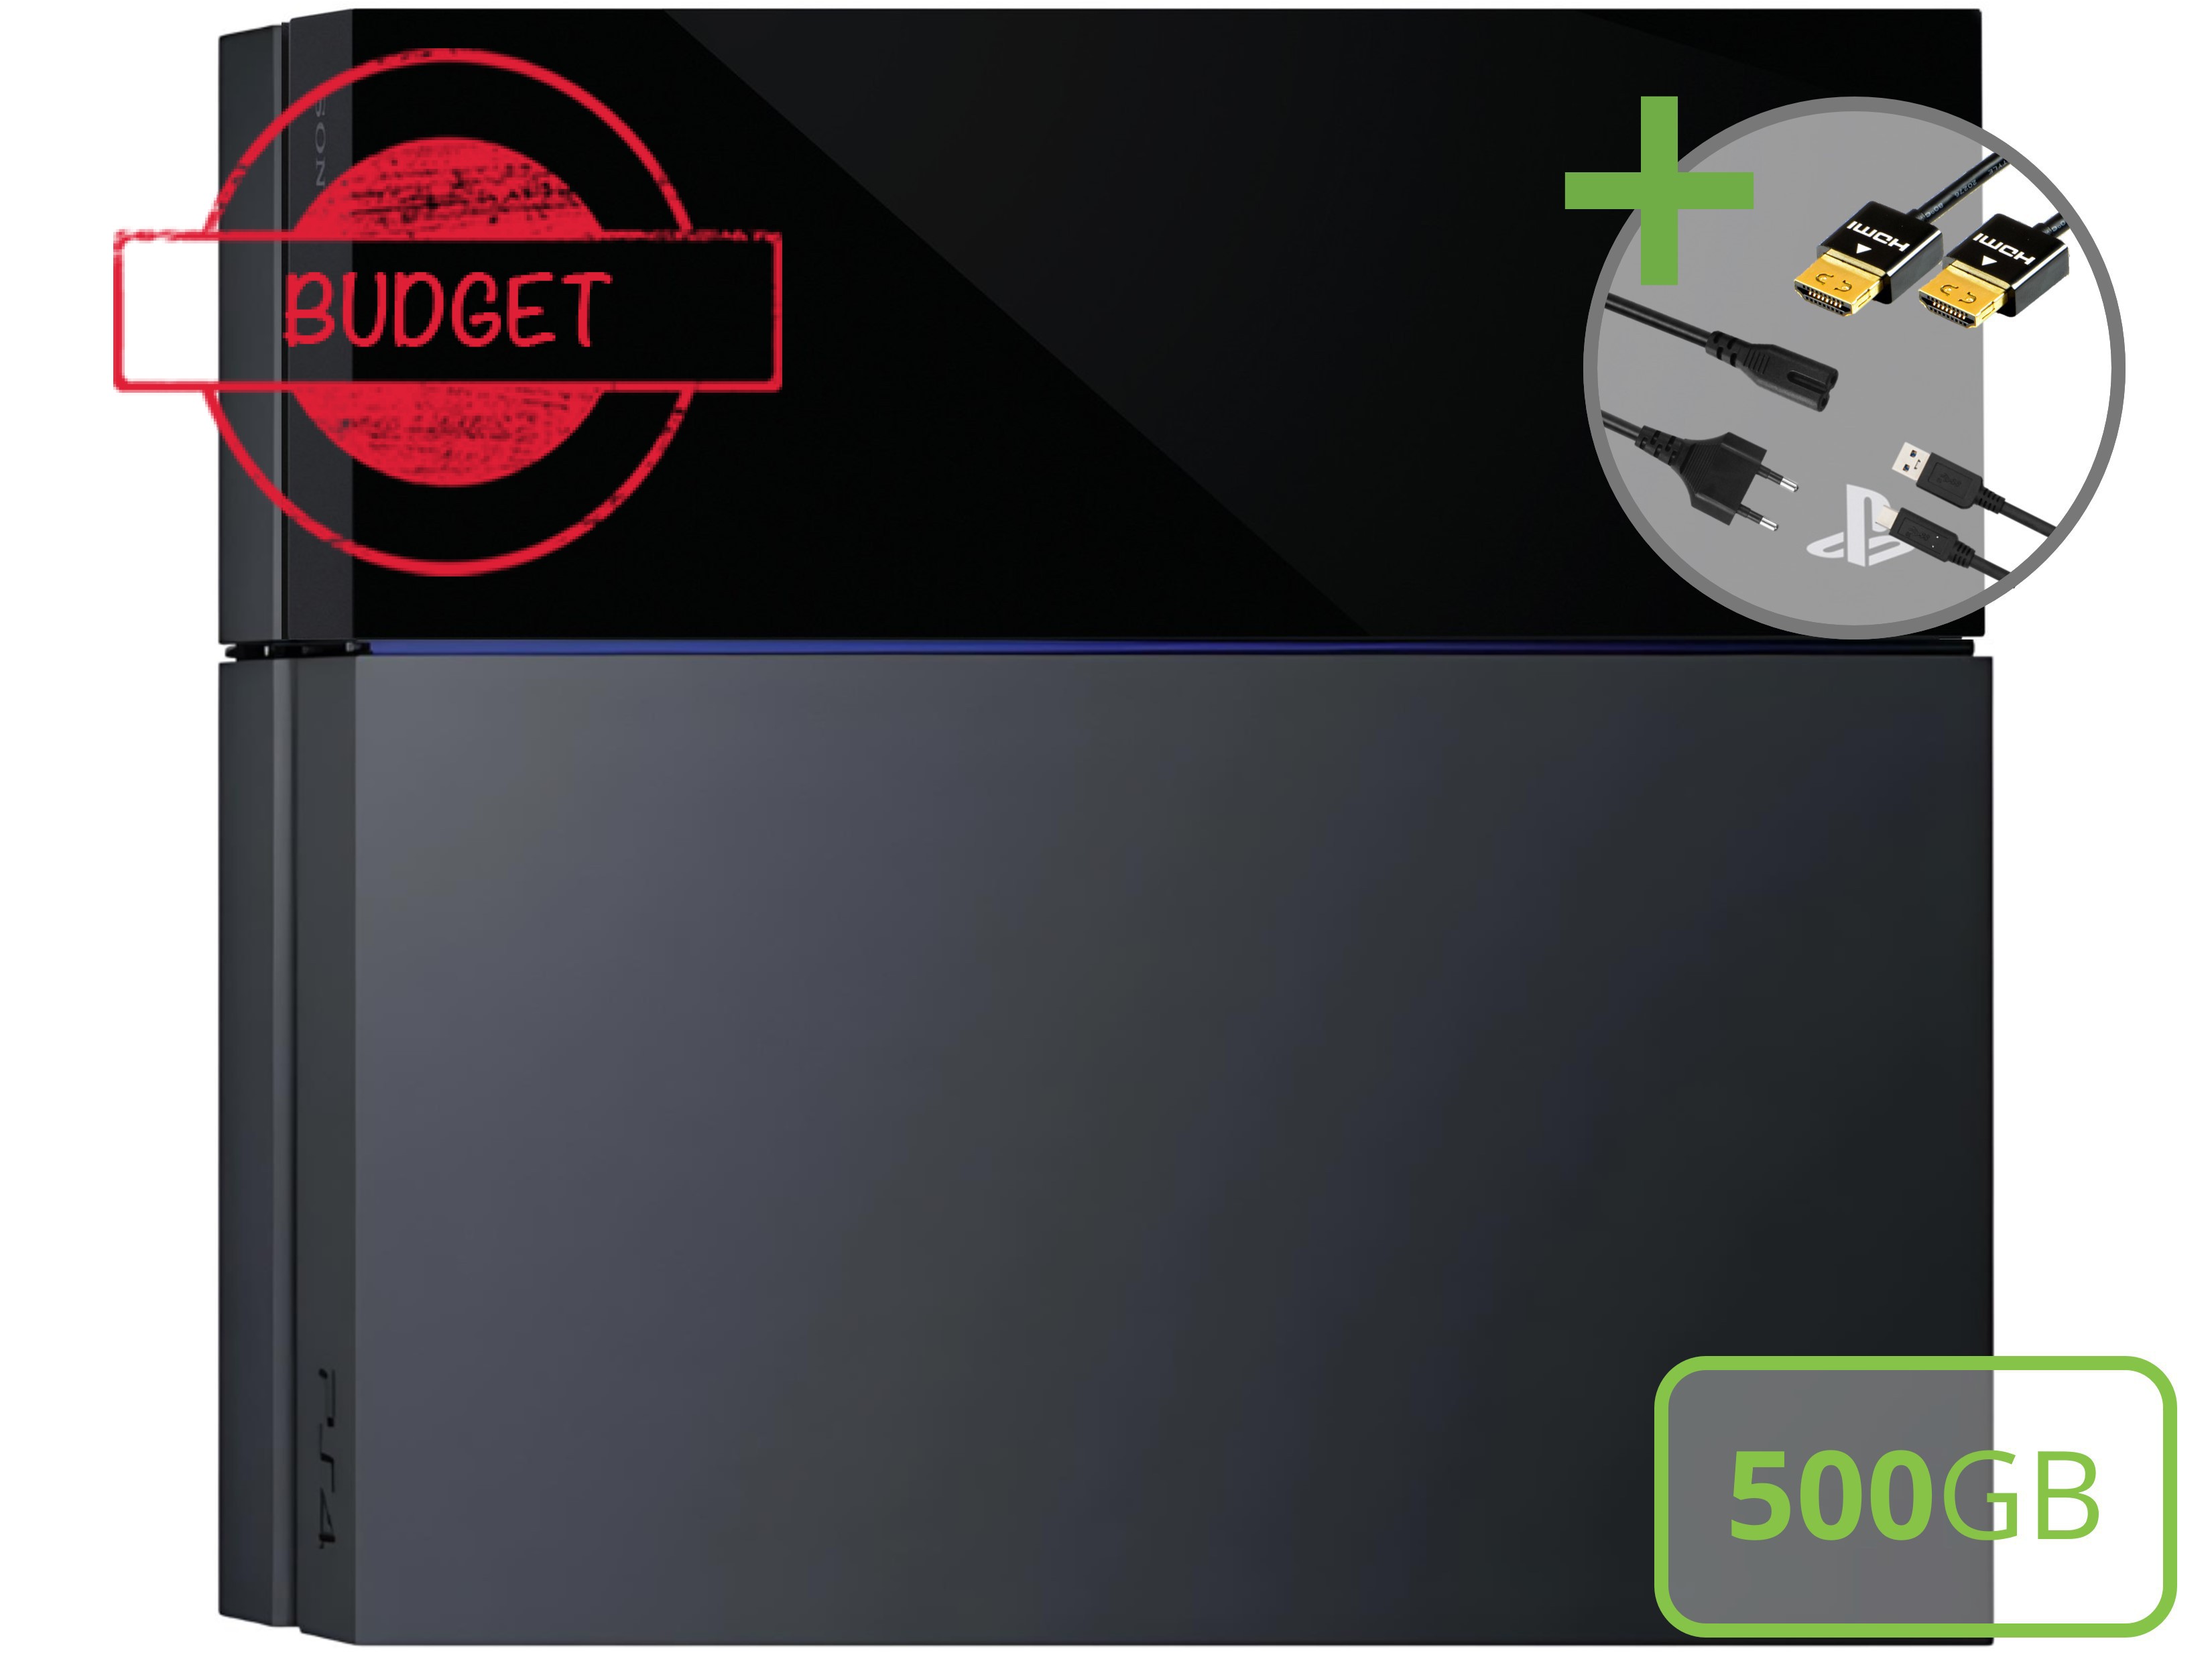 Sony PlayStation 4 Starter Pack - 500GB DualShock V1 Edition - Budget - Playstation 4 Hardware - 3